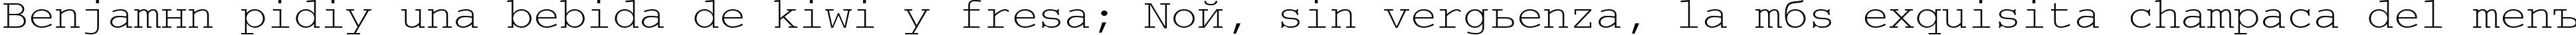 Пример написания шрифтом CourierCyrillic текста на испанском